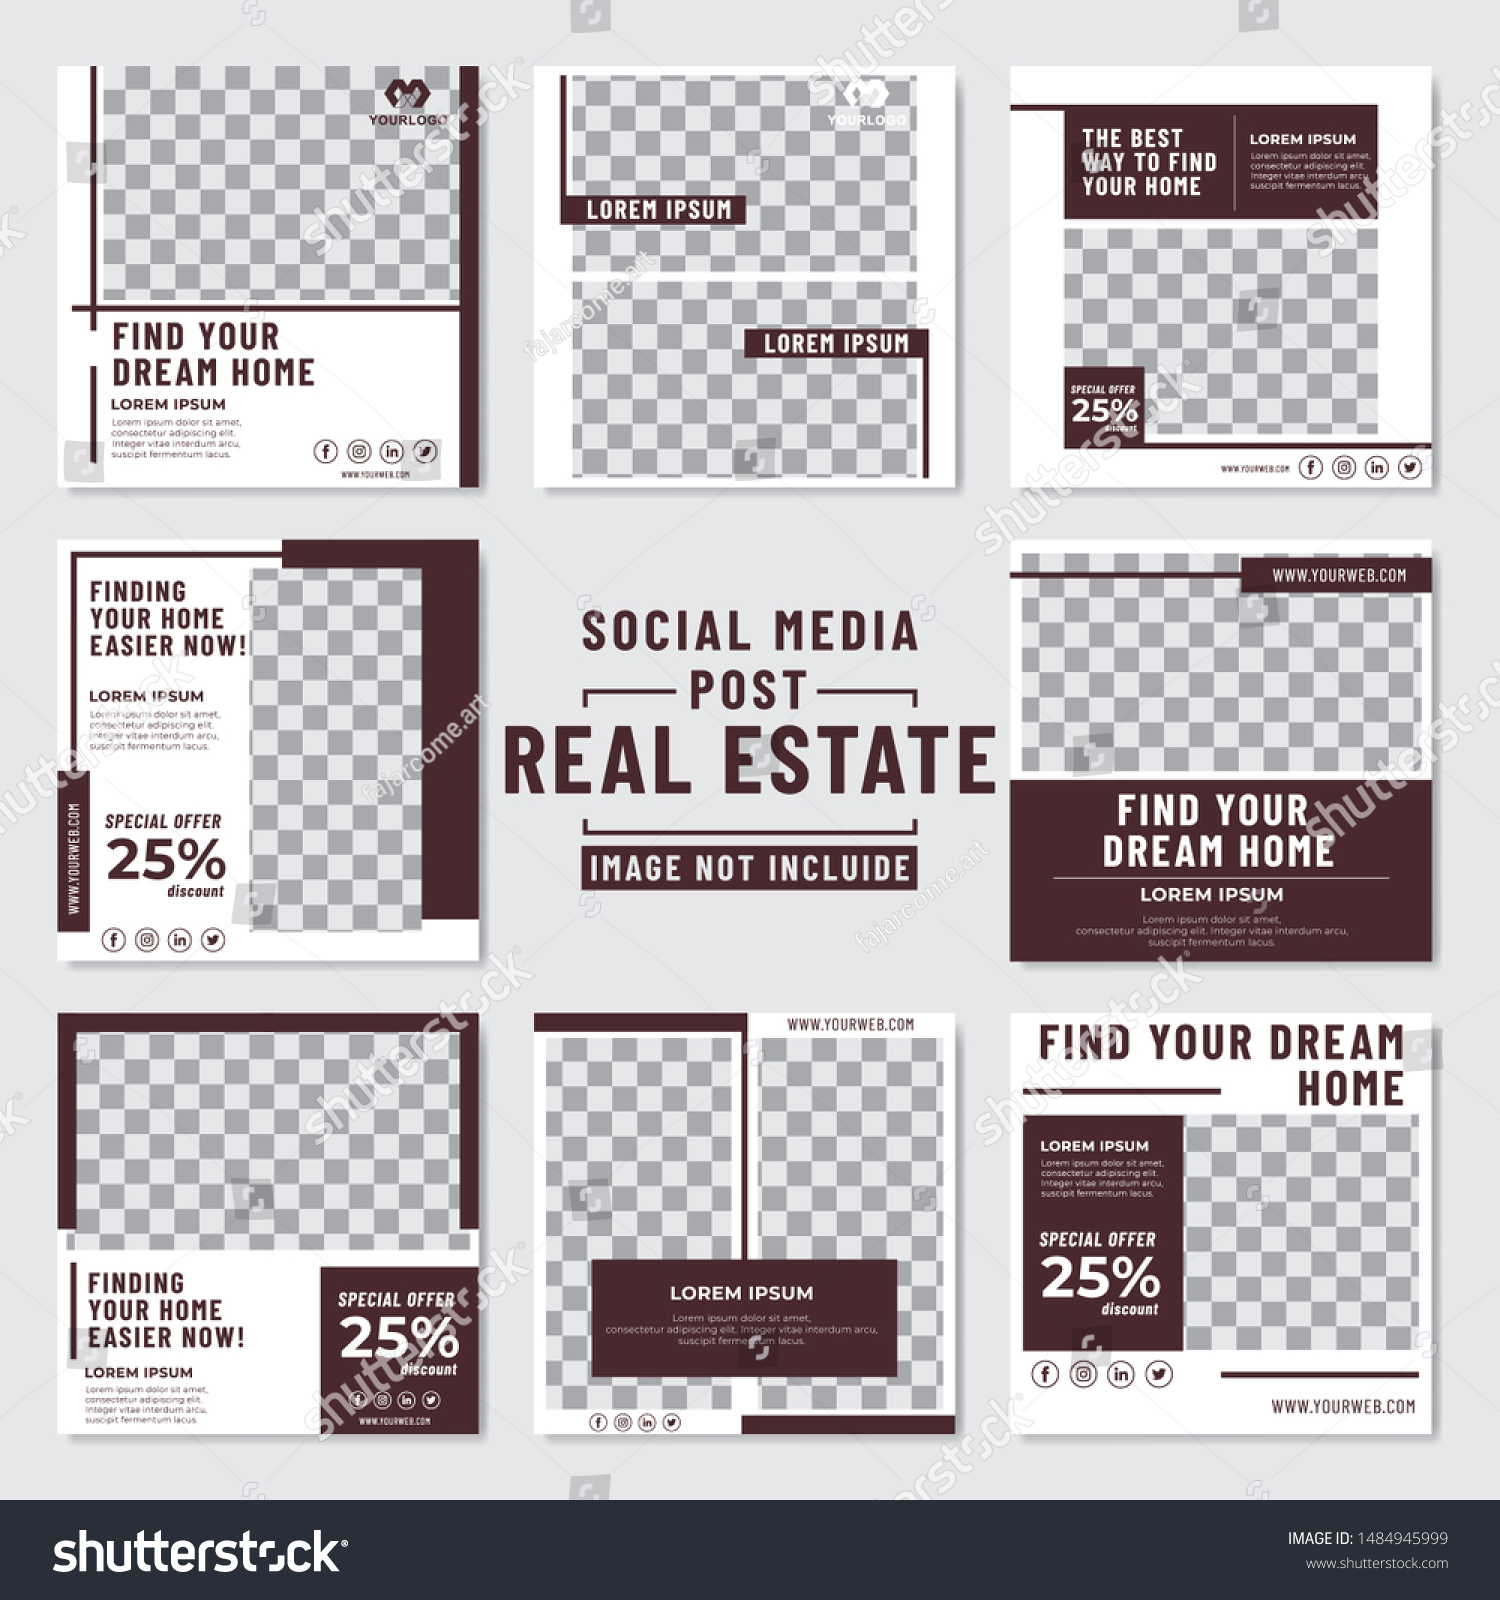 30 Enticing Real Estate Social Media Post Ideas - Sabrina's Admin Services